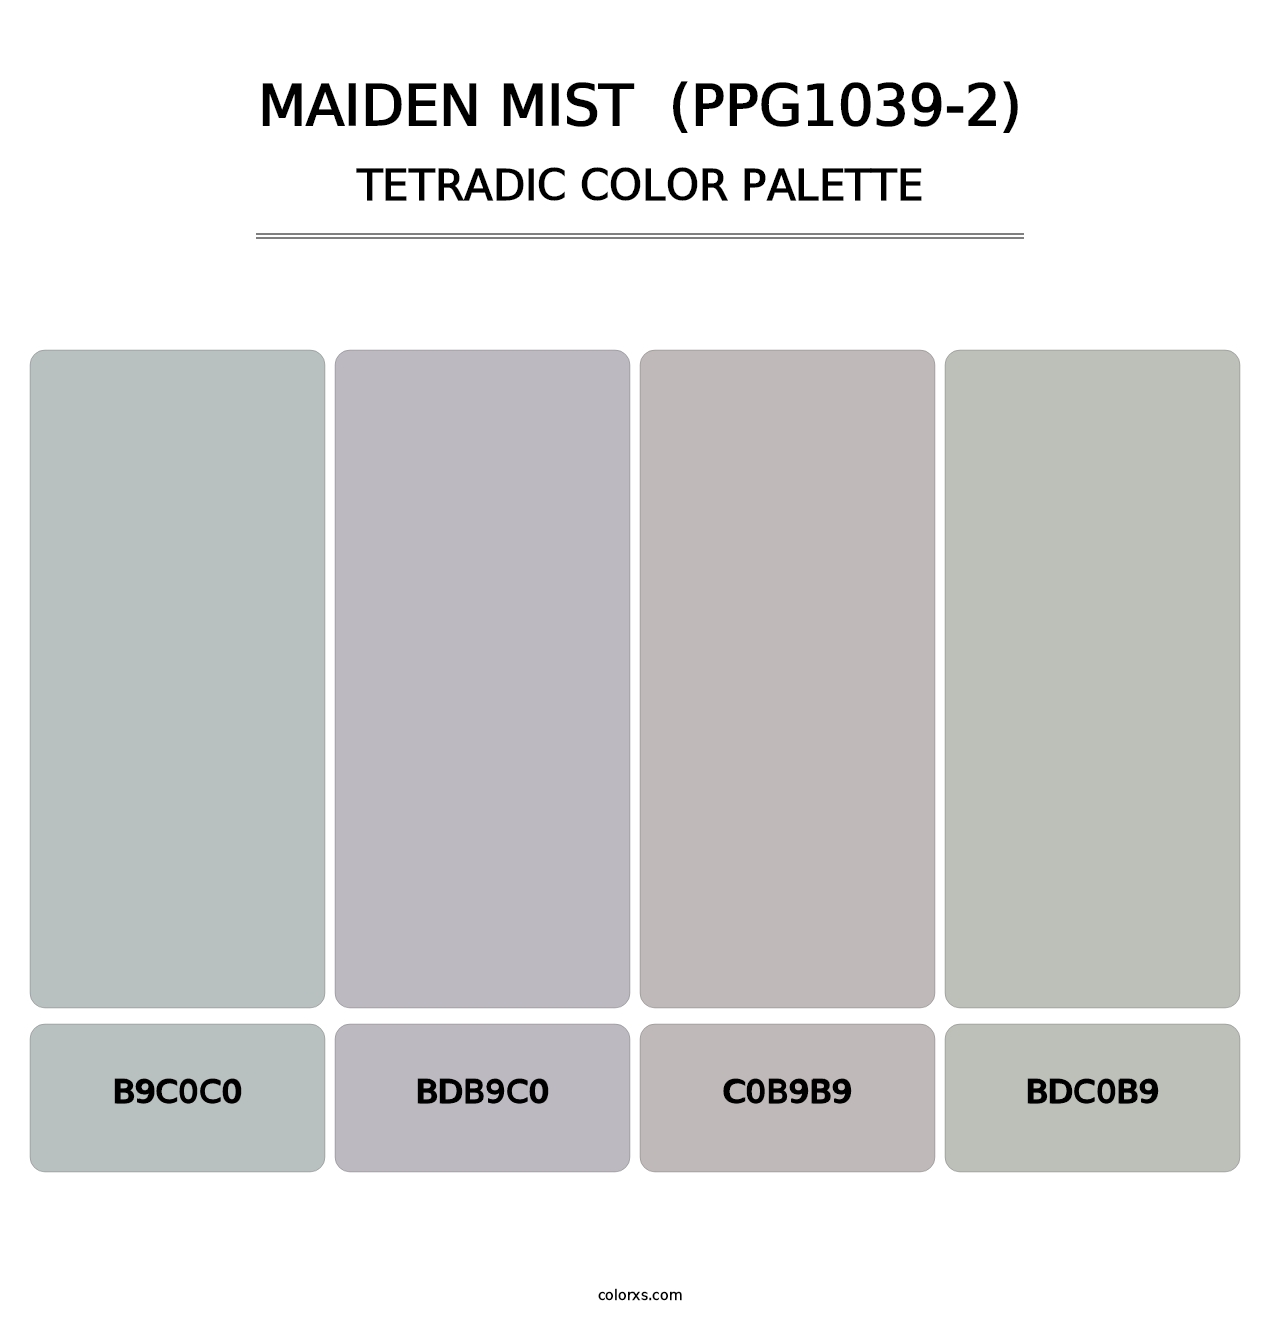 Maiden Mist  (PPG1039-2) - Tetradic Color Palette